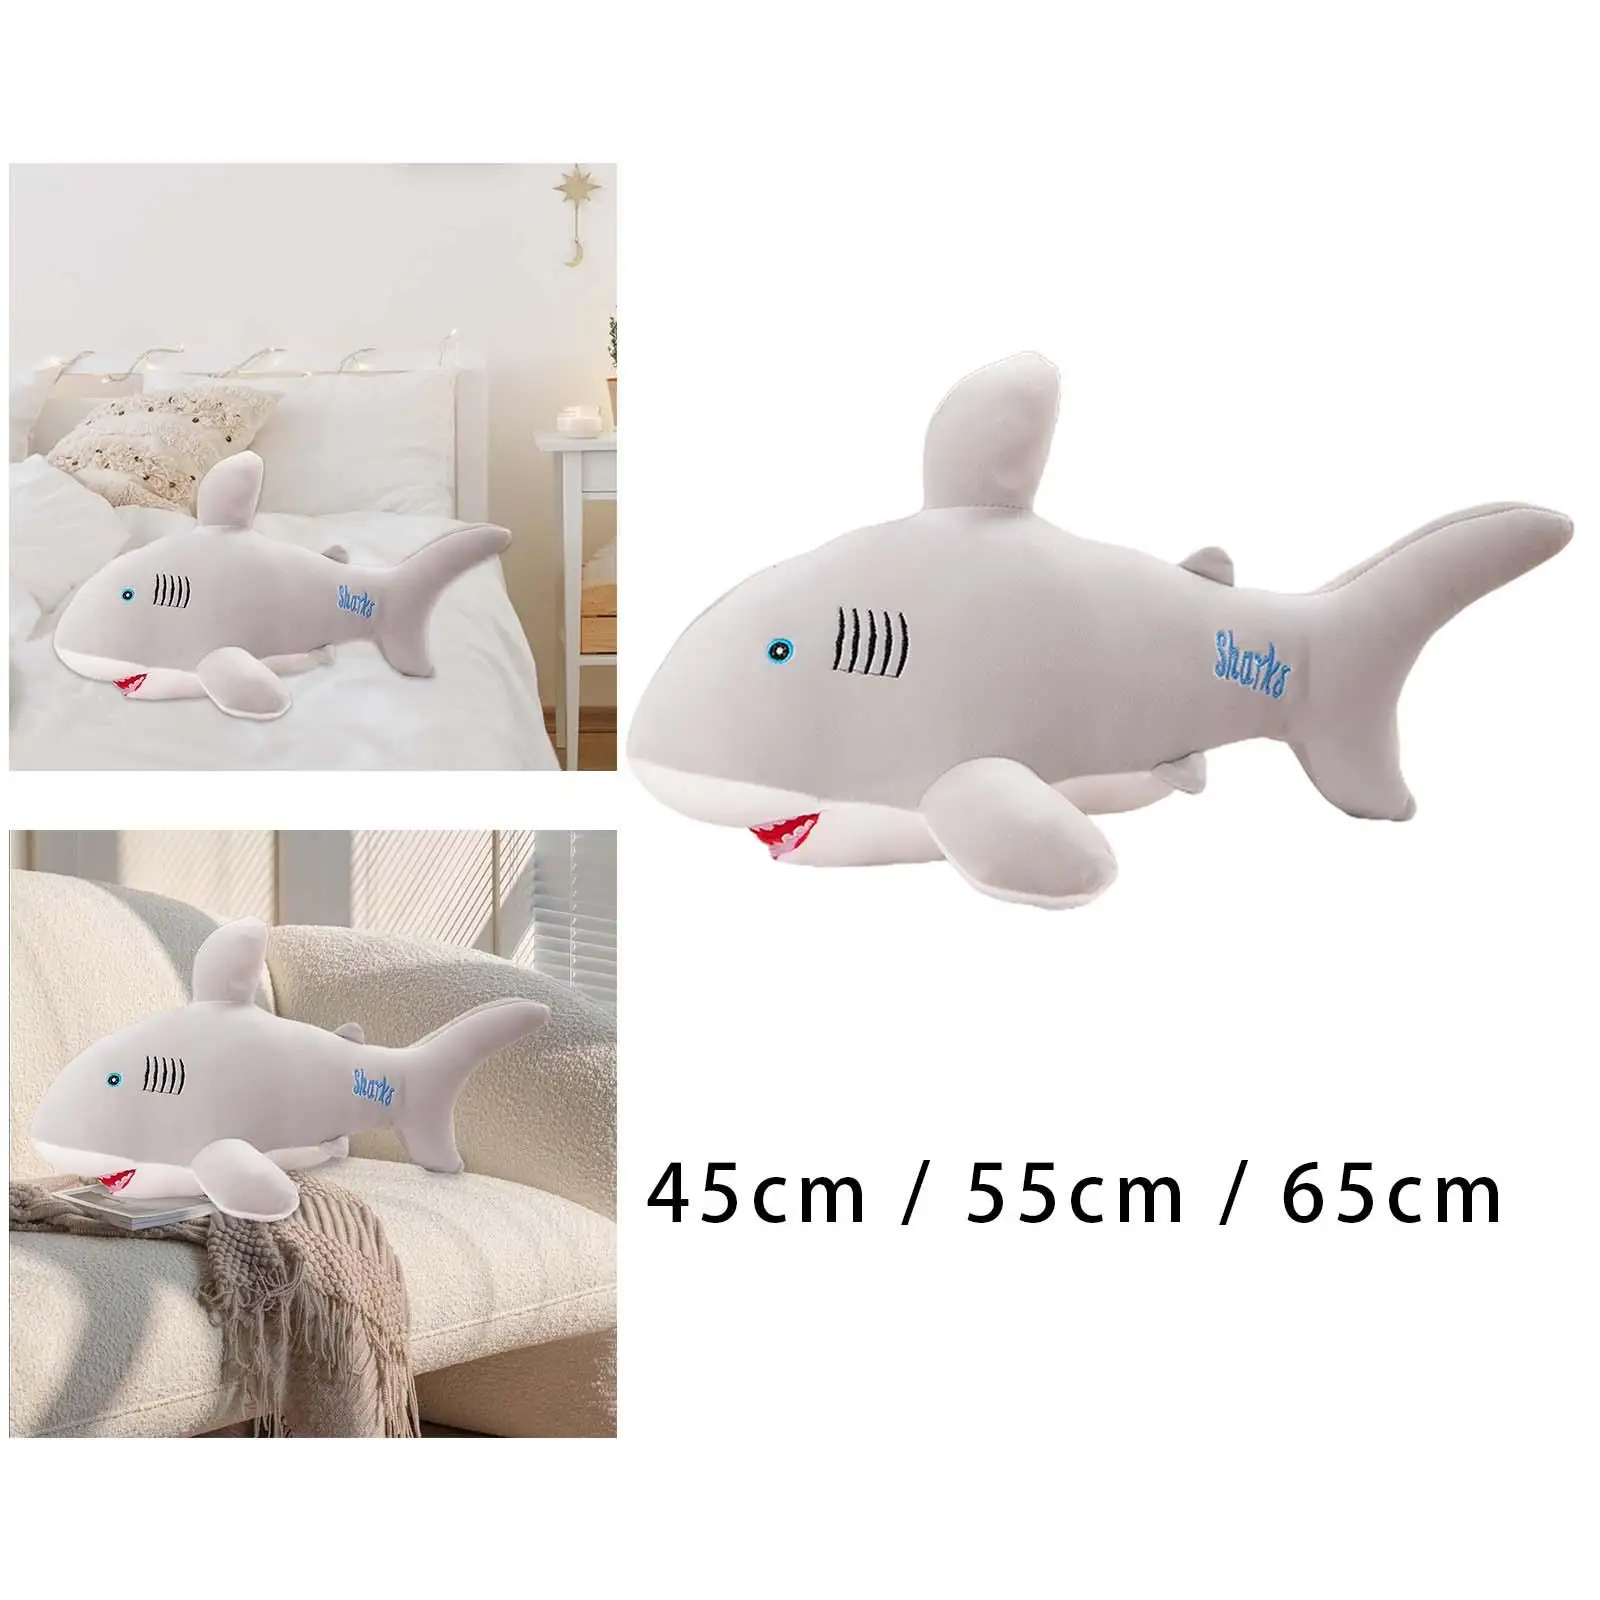 Cute Shark Plush Toys Ornament Sleeping Hugging Pillows for Halloween Sofa